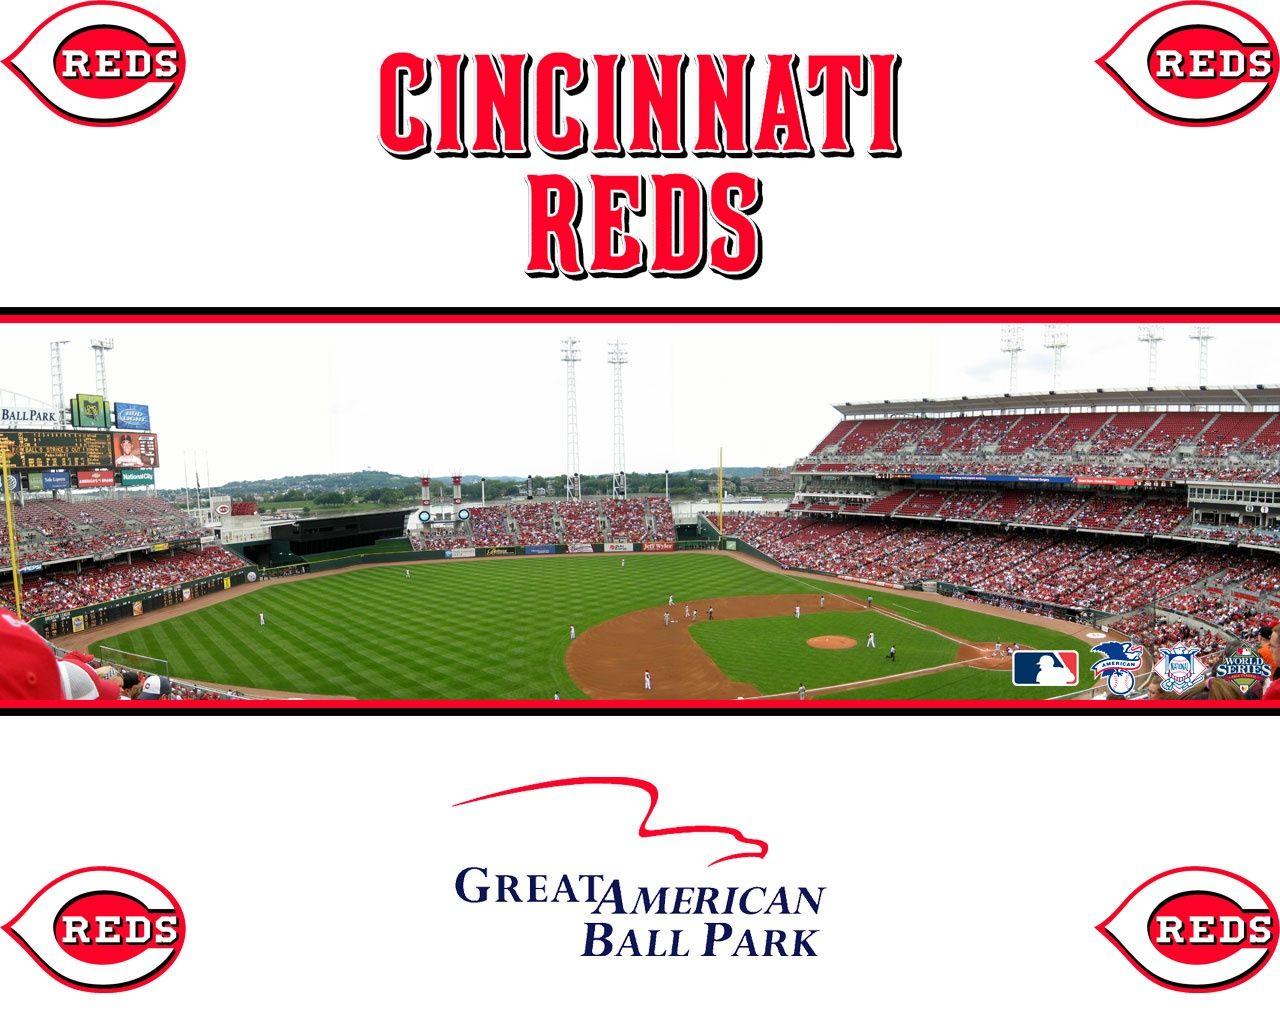 Cincinnati Reds Desktop Wallpaper 1280x1024 (197.87 KB)